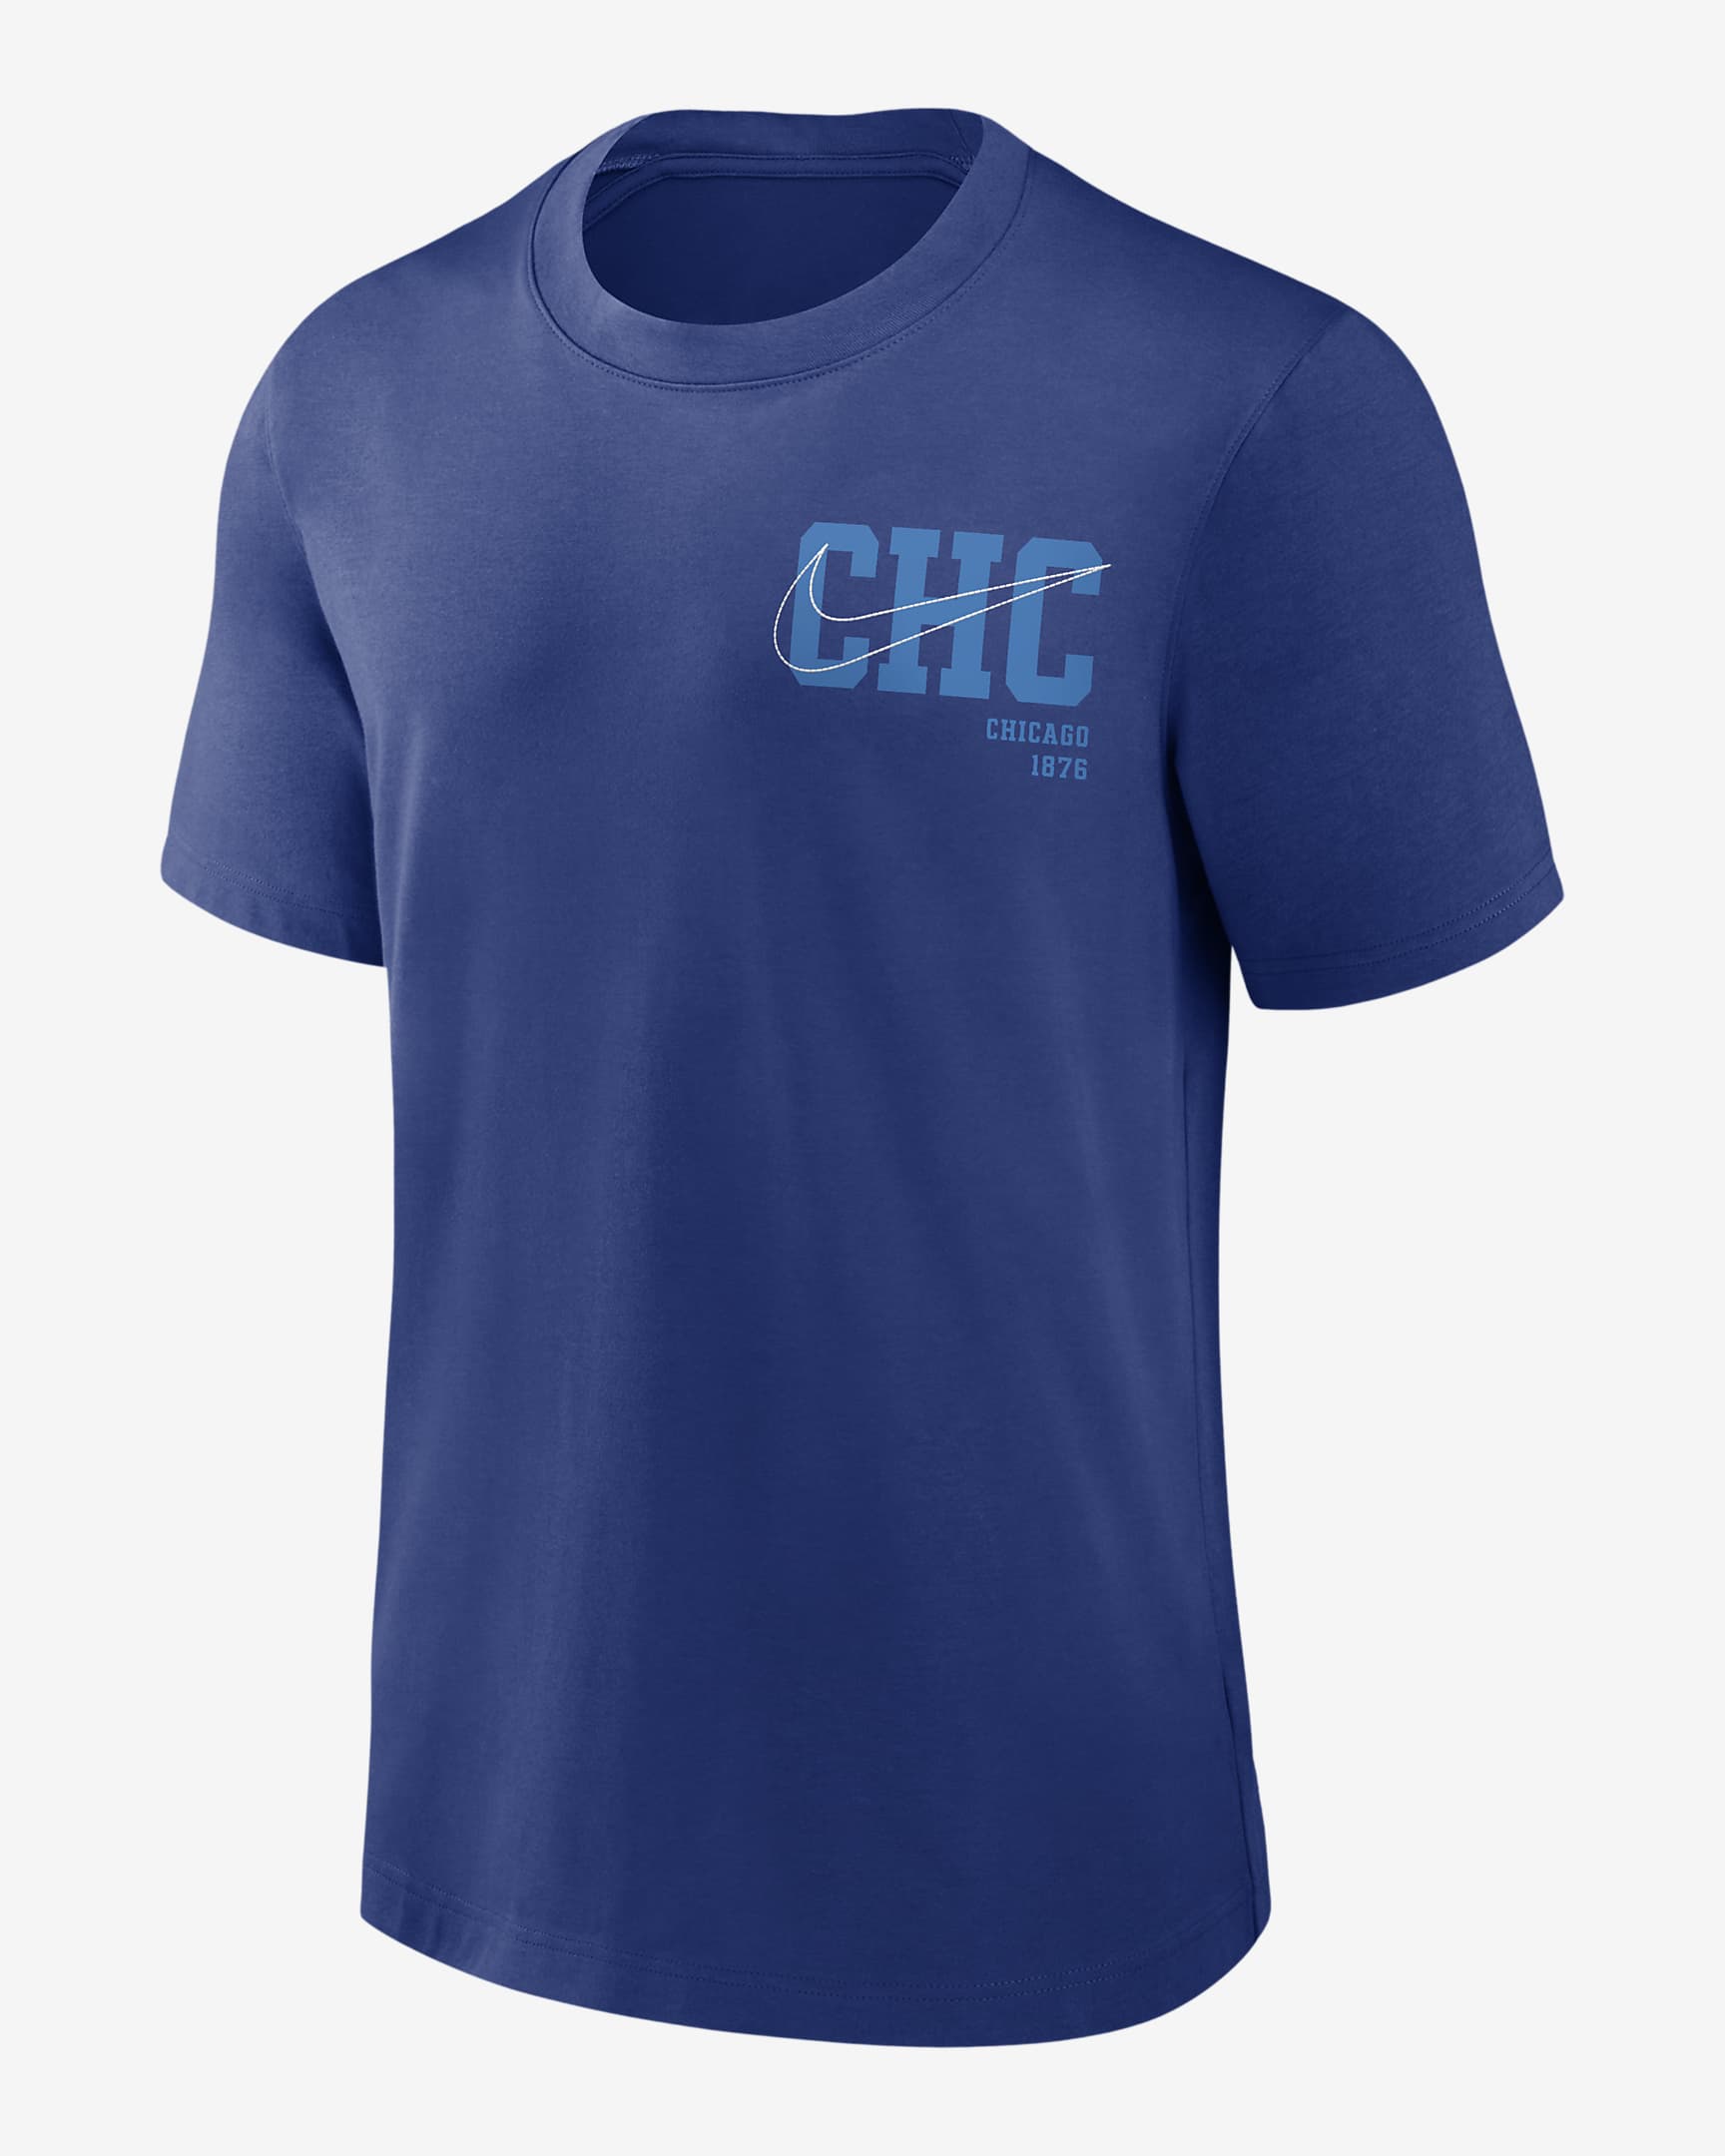 Nike Statement Game Over (MLB Chicago Cubs) Men's T-Shirt. Nike.com